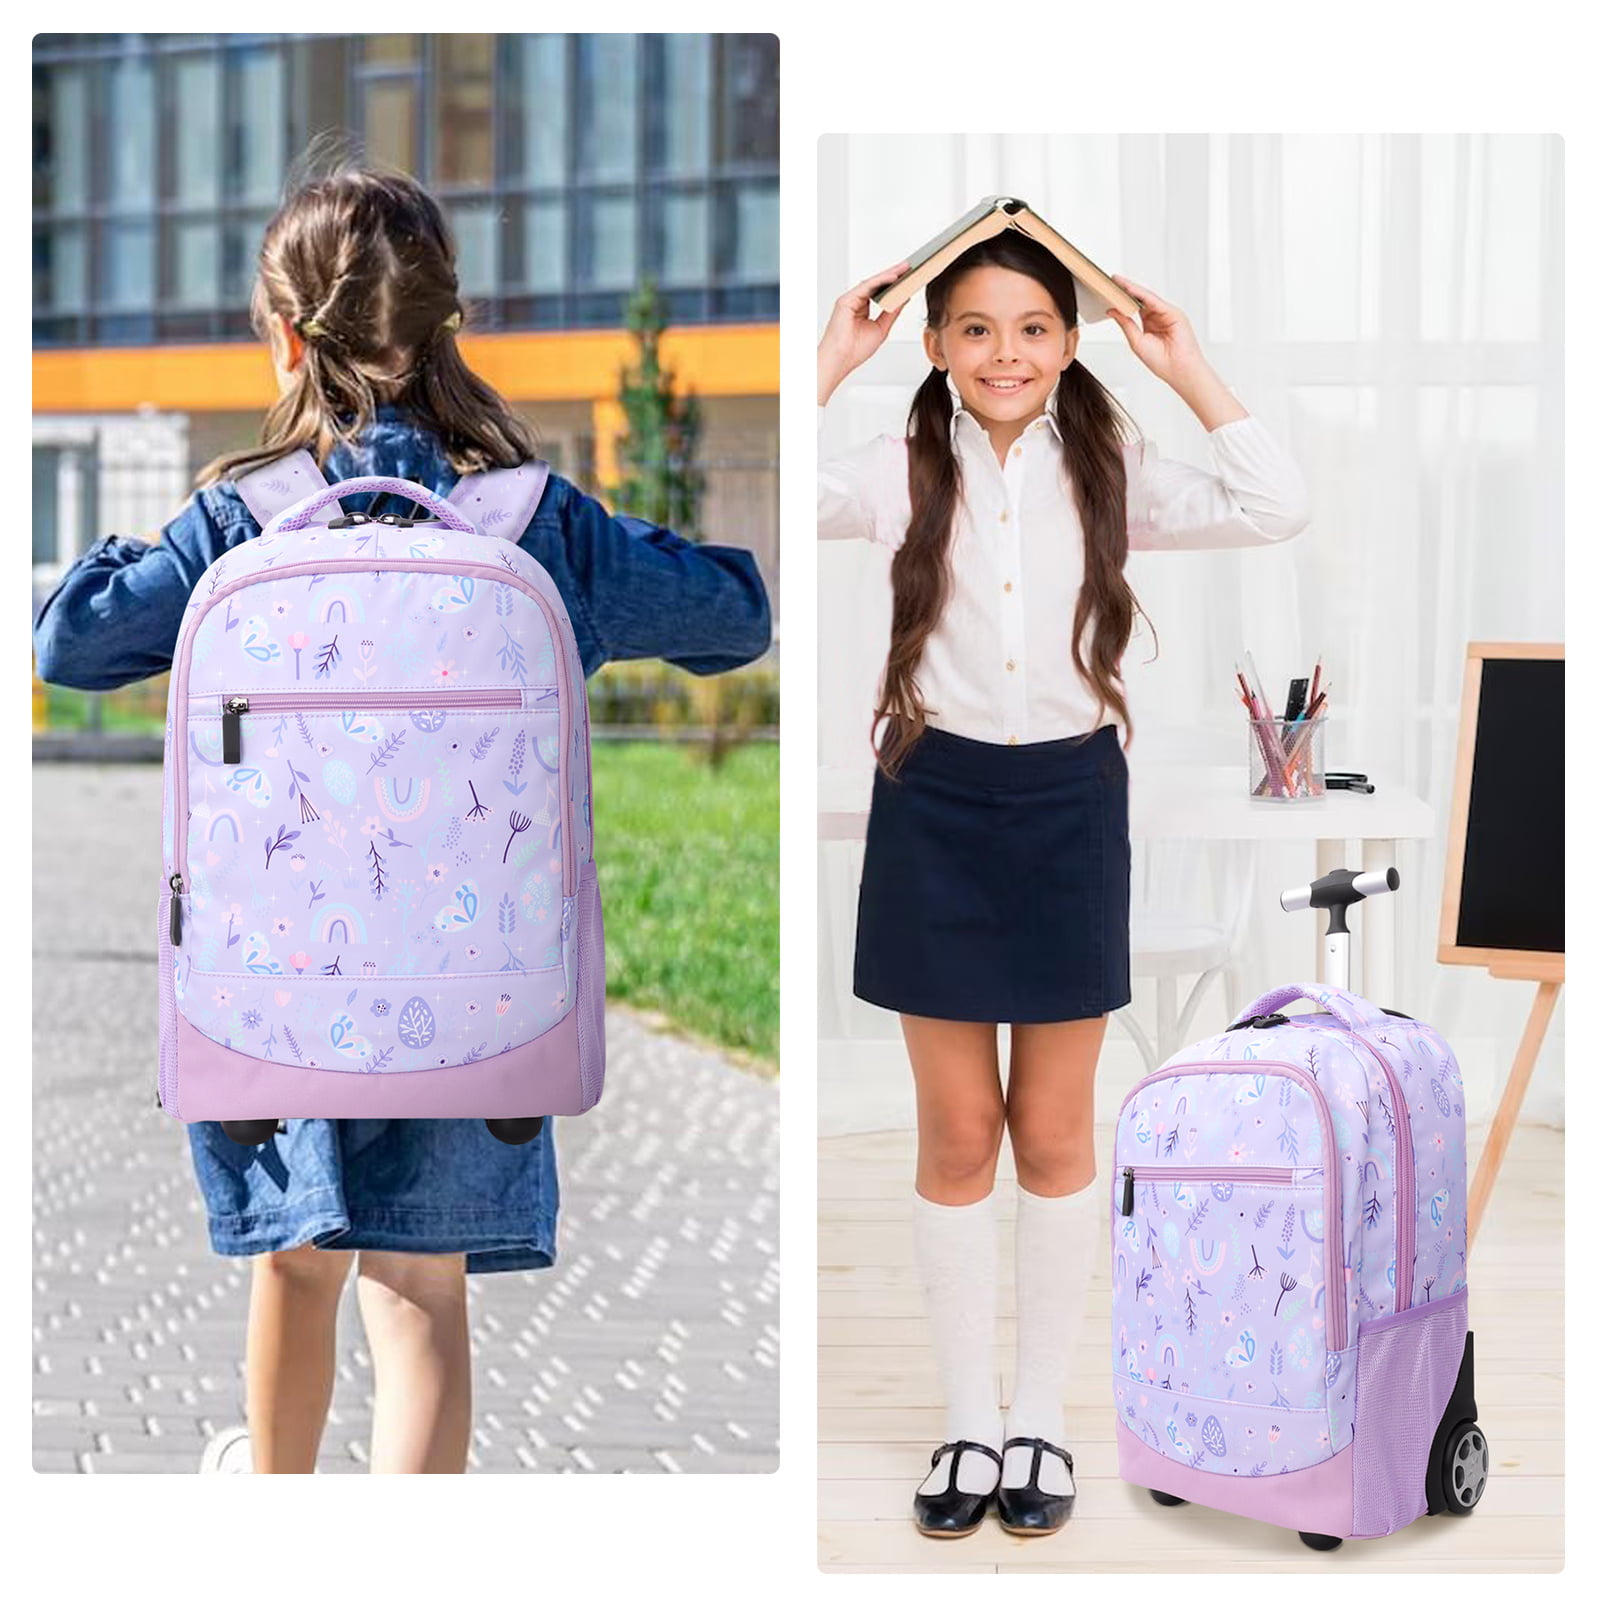 lvyH Kids Rolling Backpack for Boys Girls,Large Waterproof Cartoon